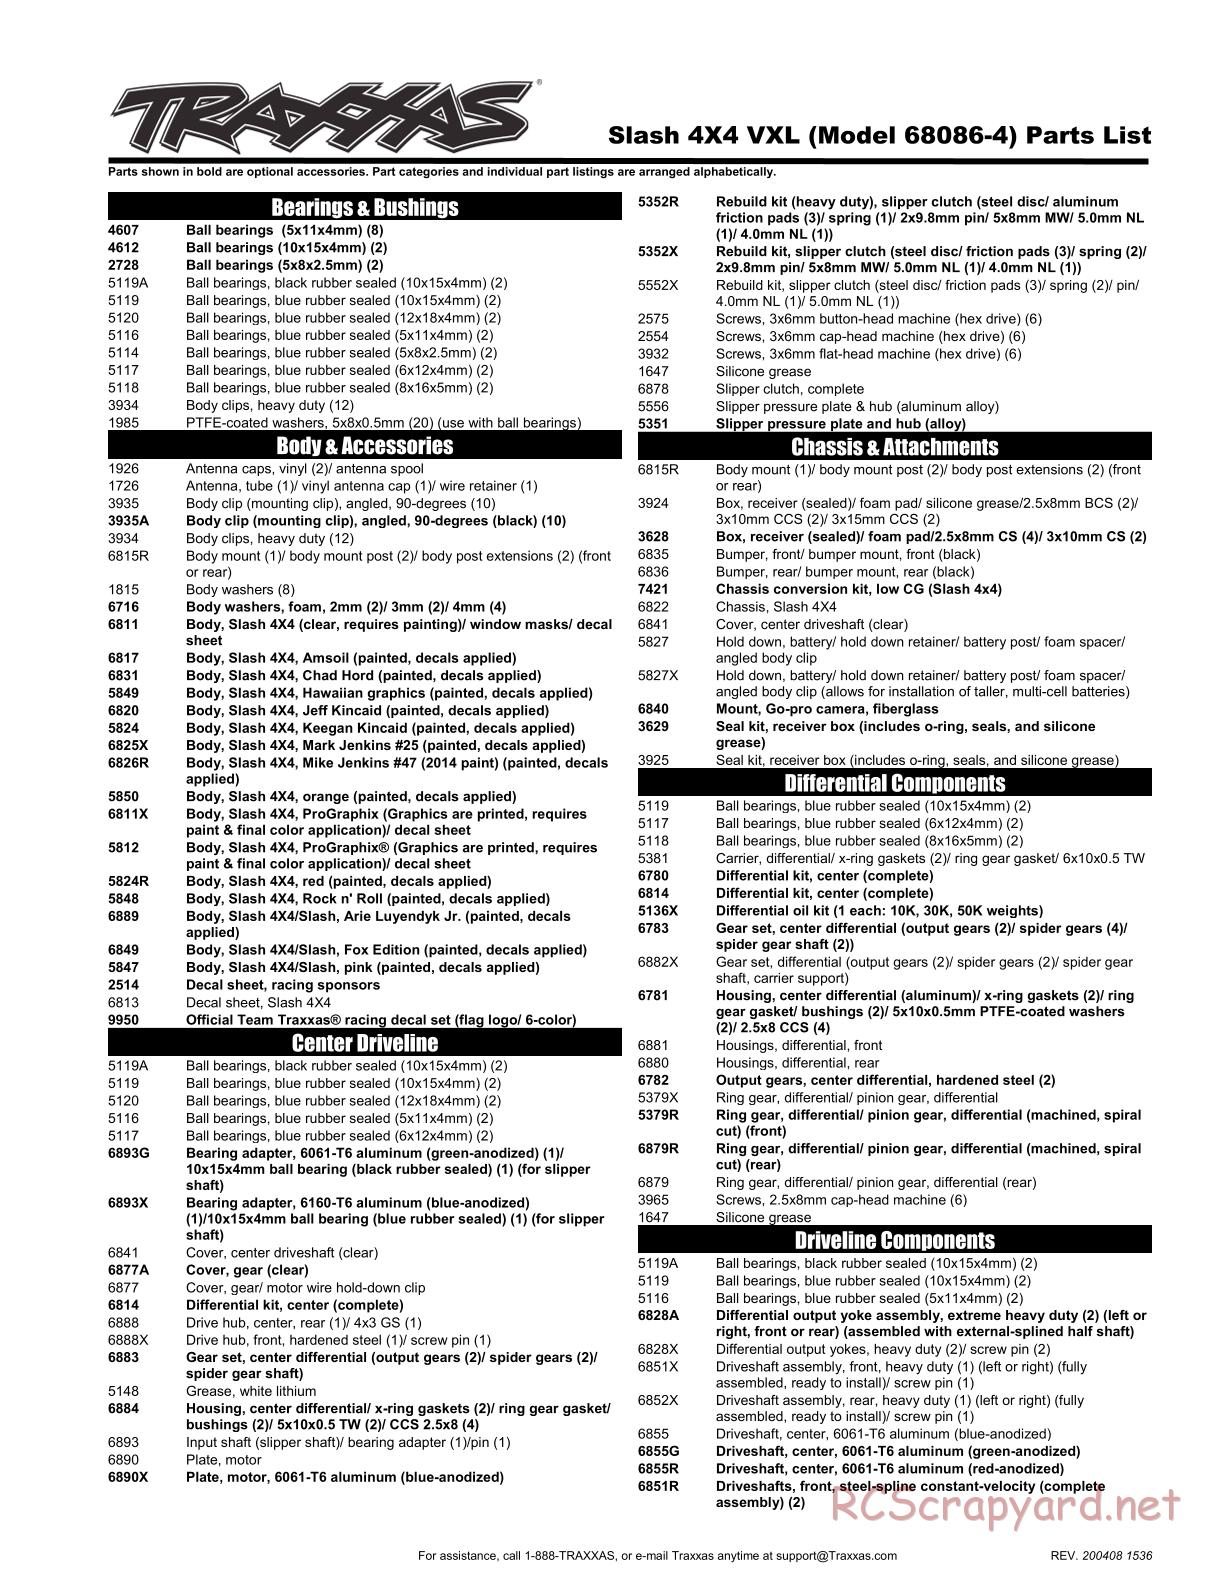 Traxxas - Slash 4x4 VXL - Parts List - Page 1